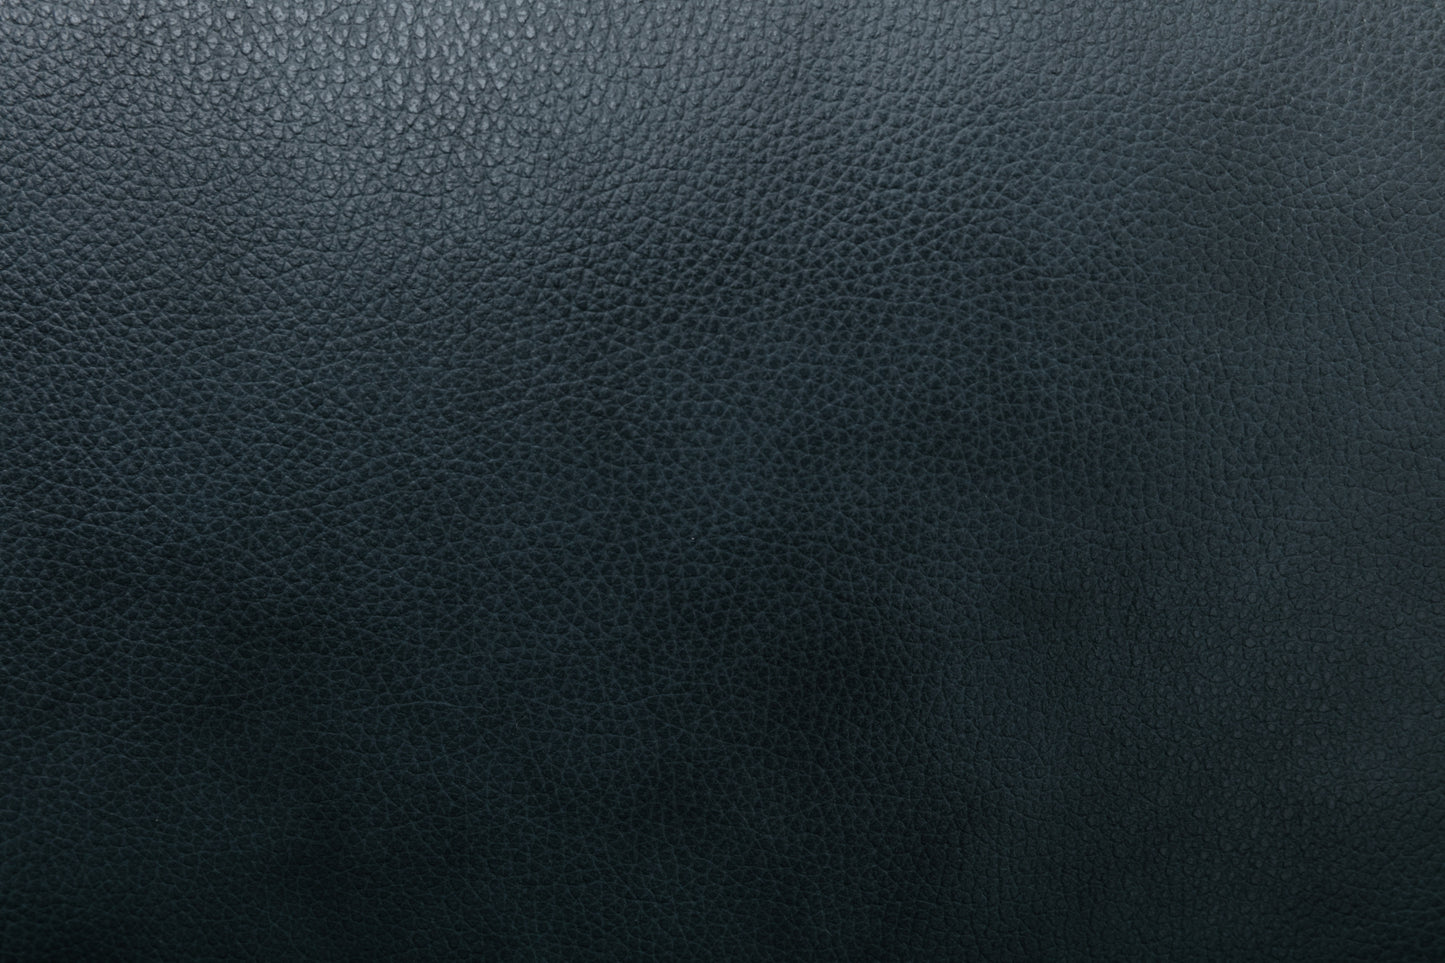 33.5inch Wide Genuine Leather Manual Ergonomic Recliner